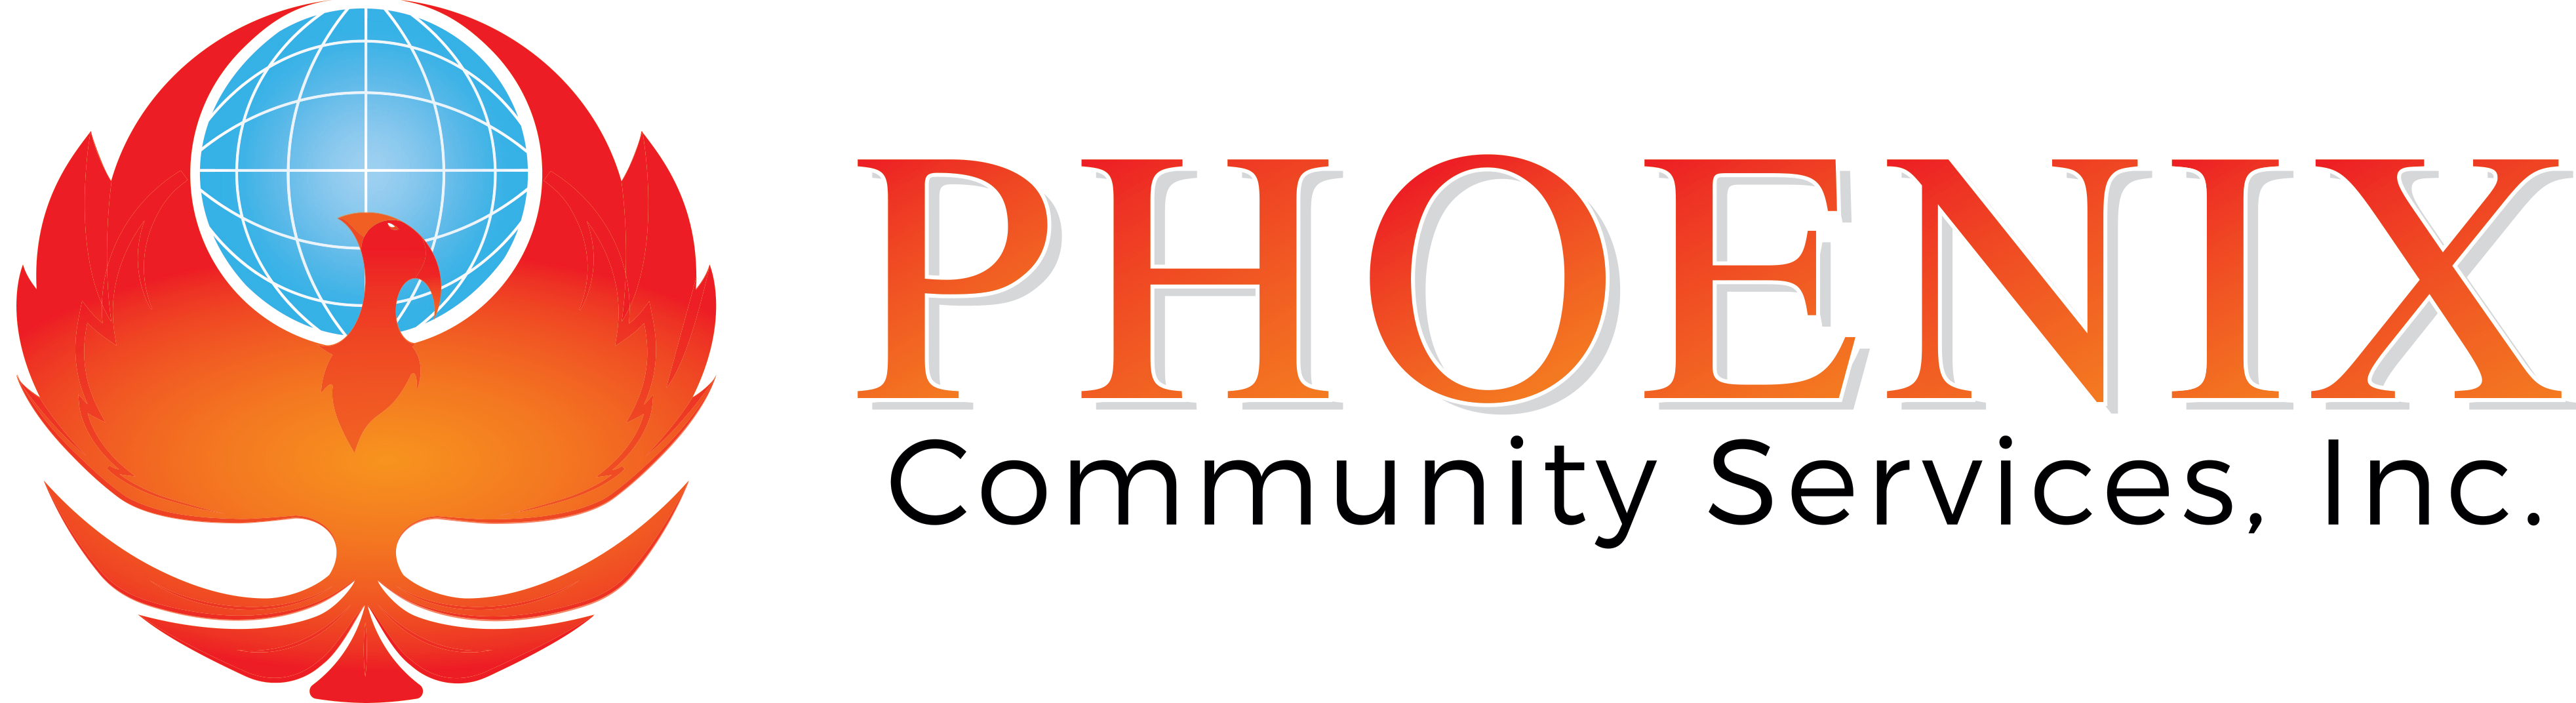 Phoenix Community Services Inc.